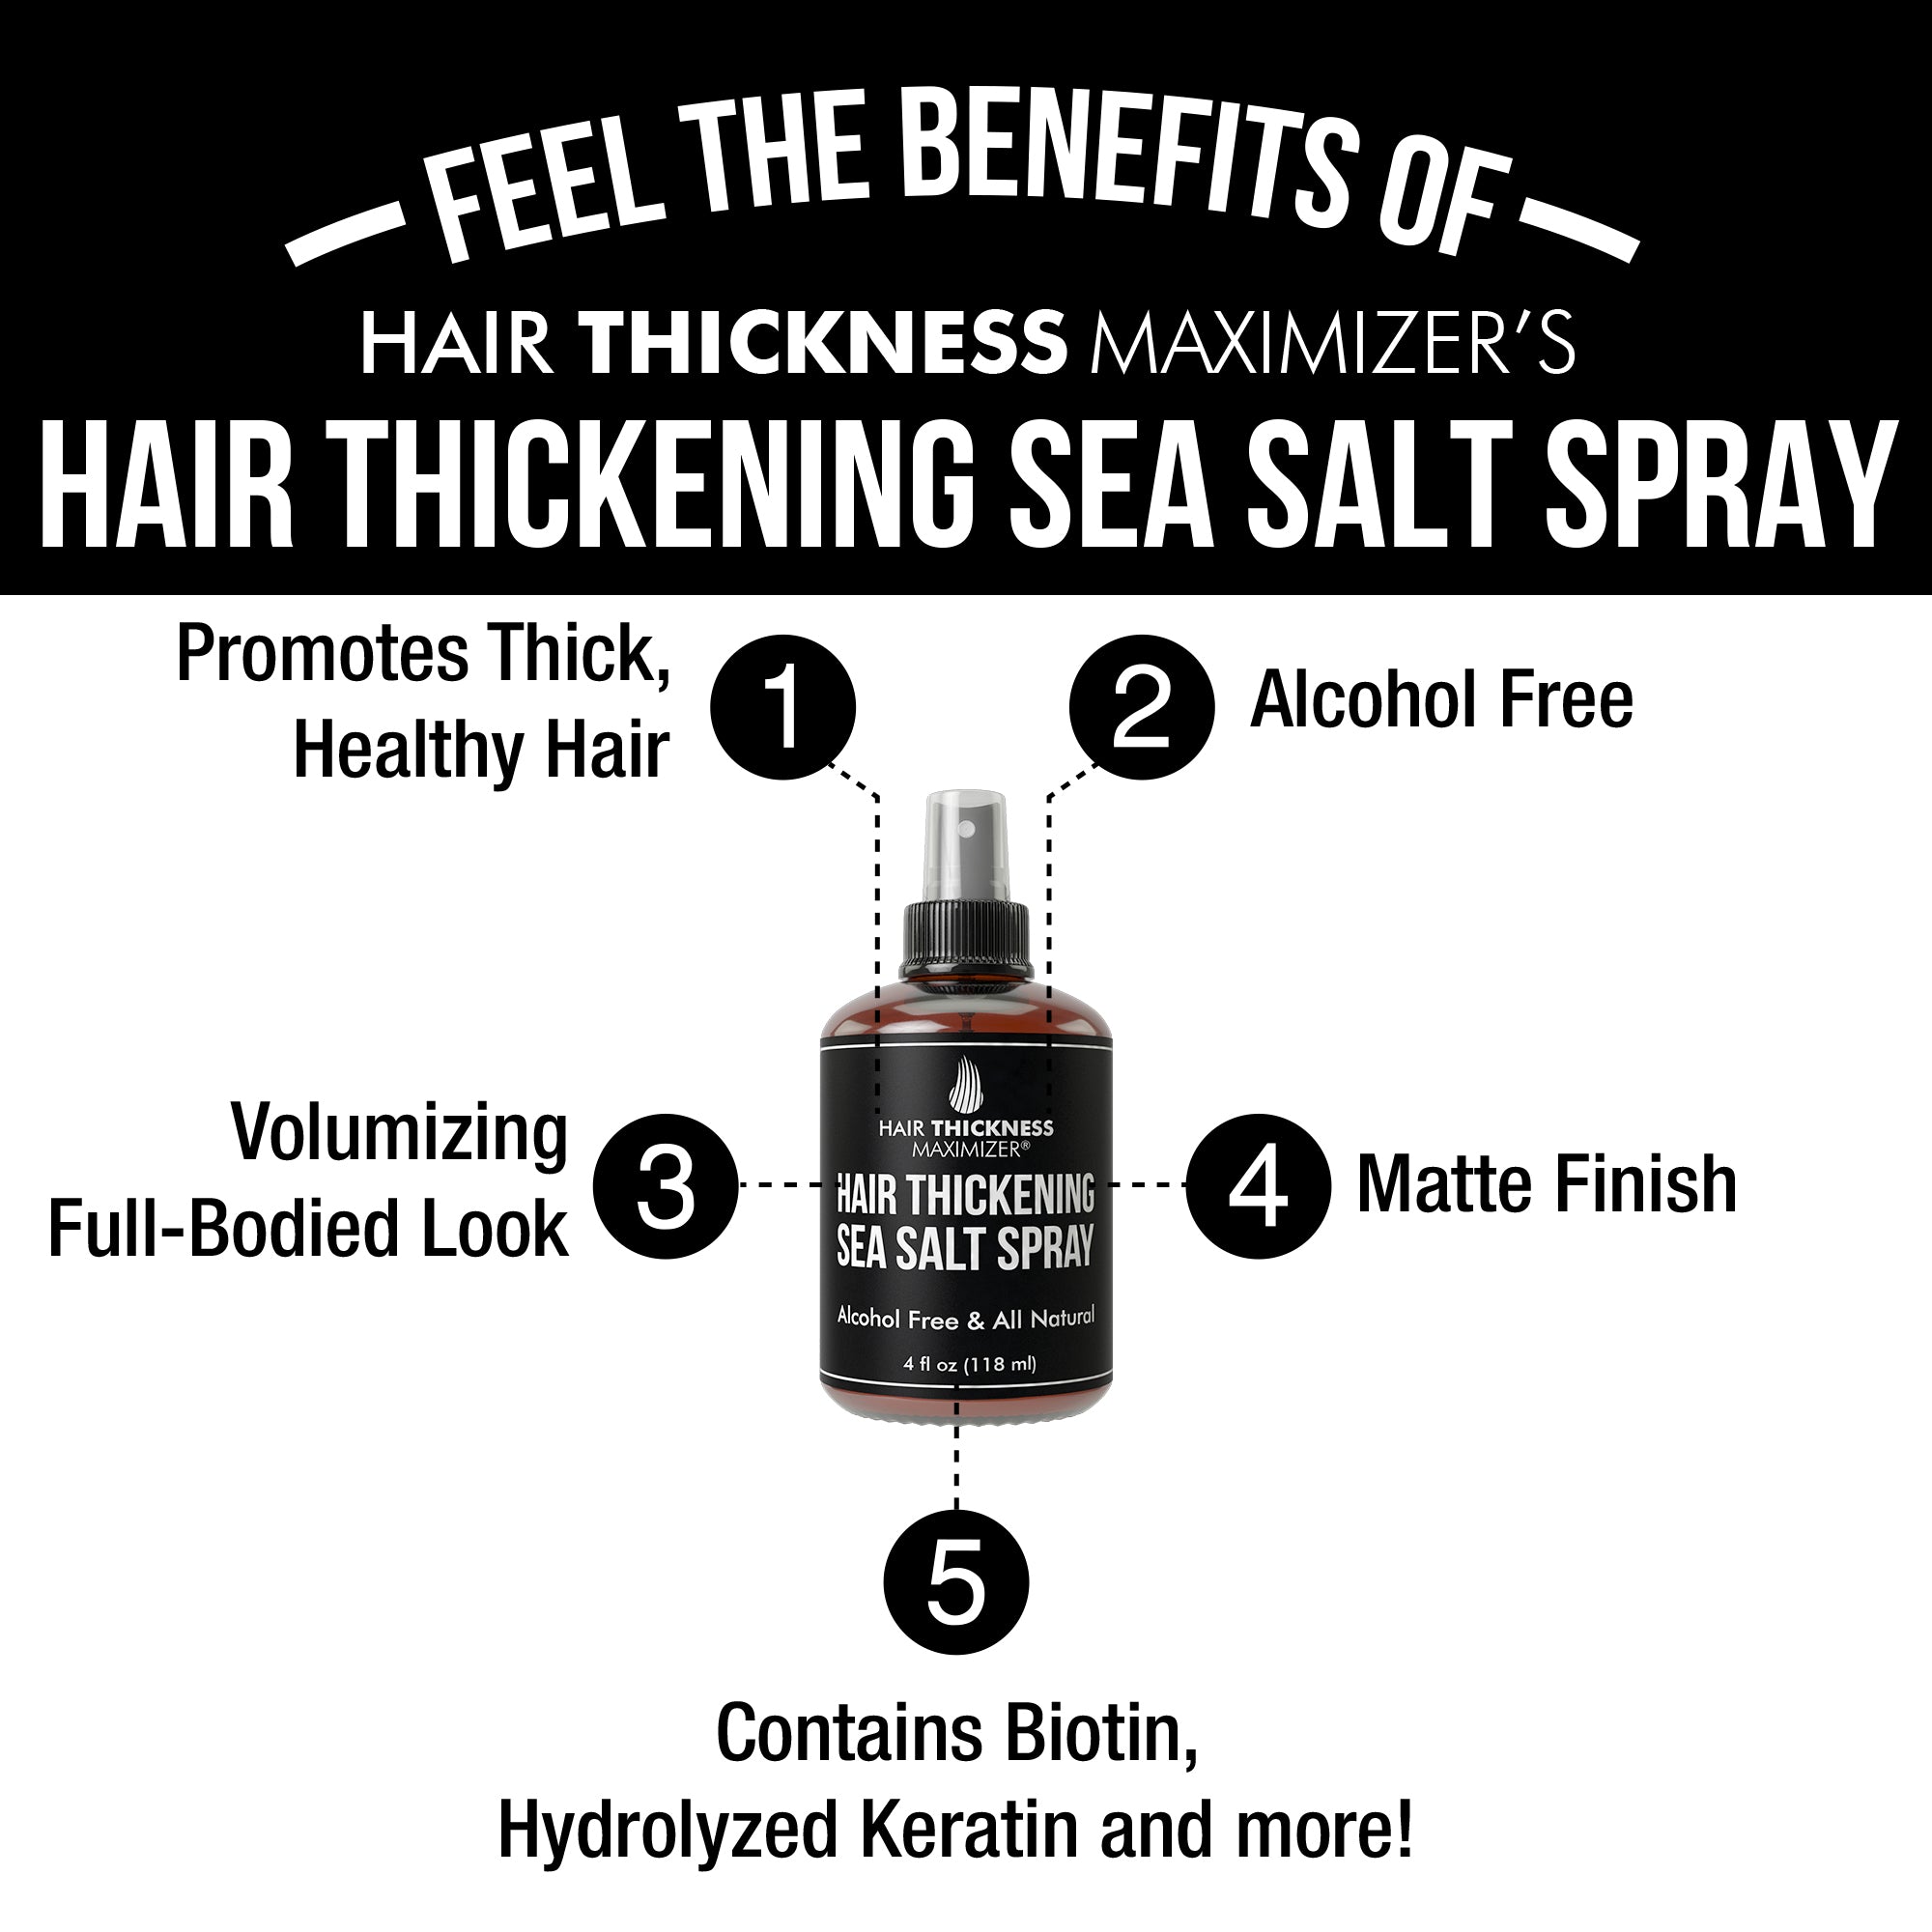 Sea Salt Spray For Hair Thickening – Hair Thickness Maximizer